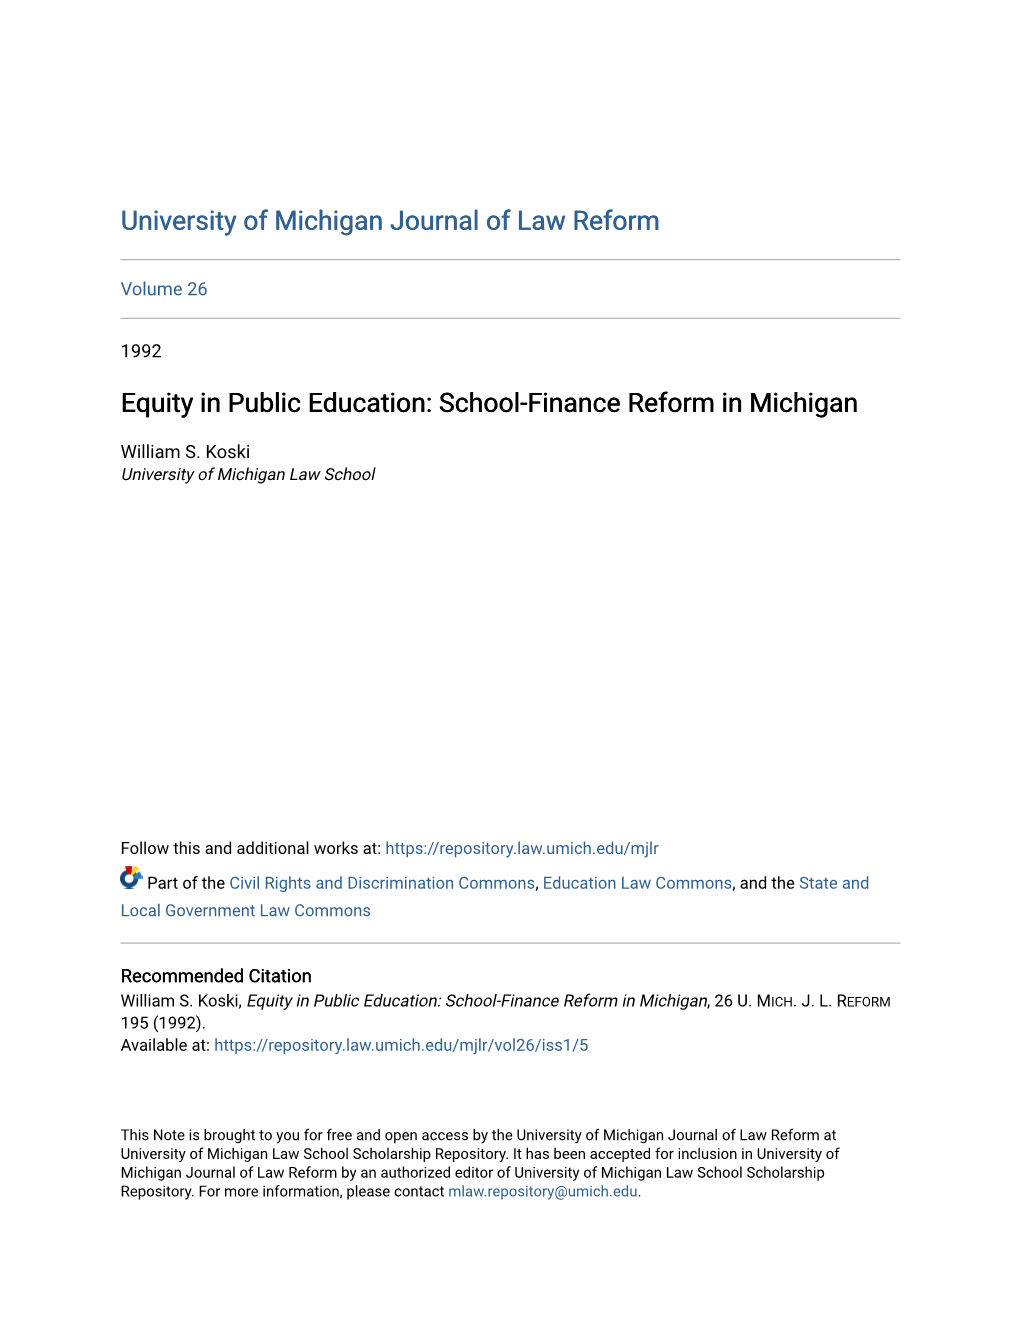 School-Finance Reform in Michigan